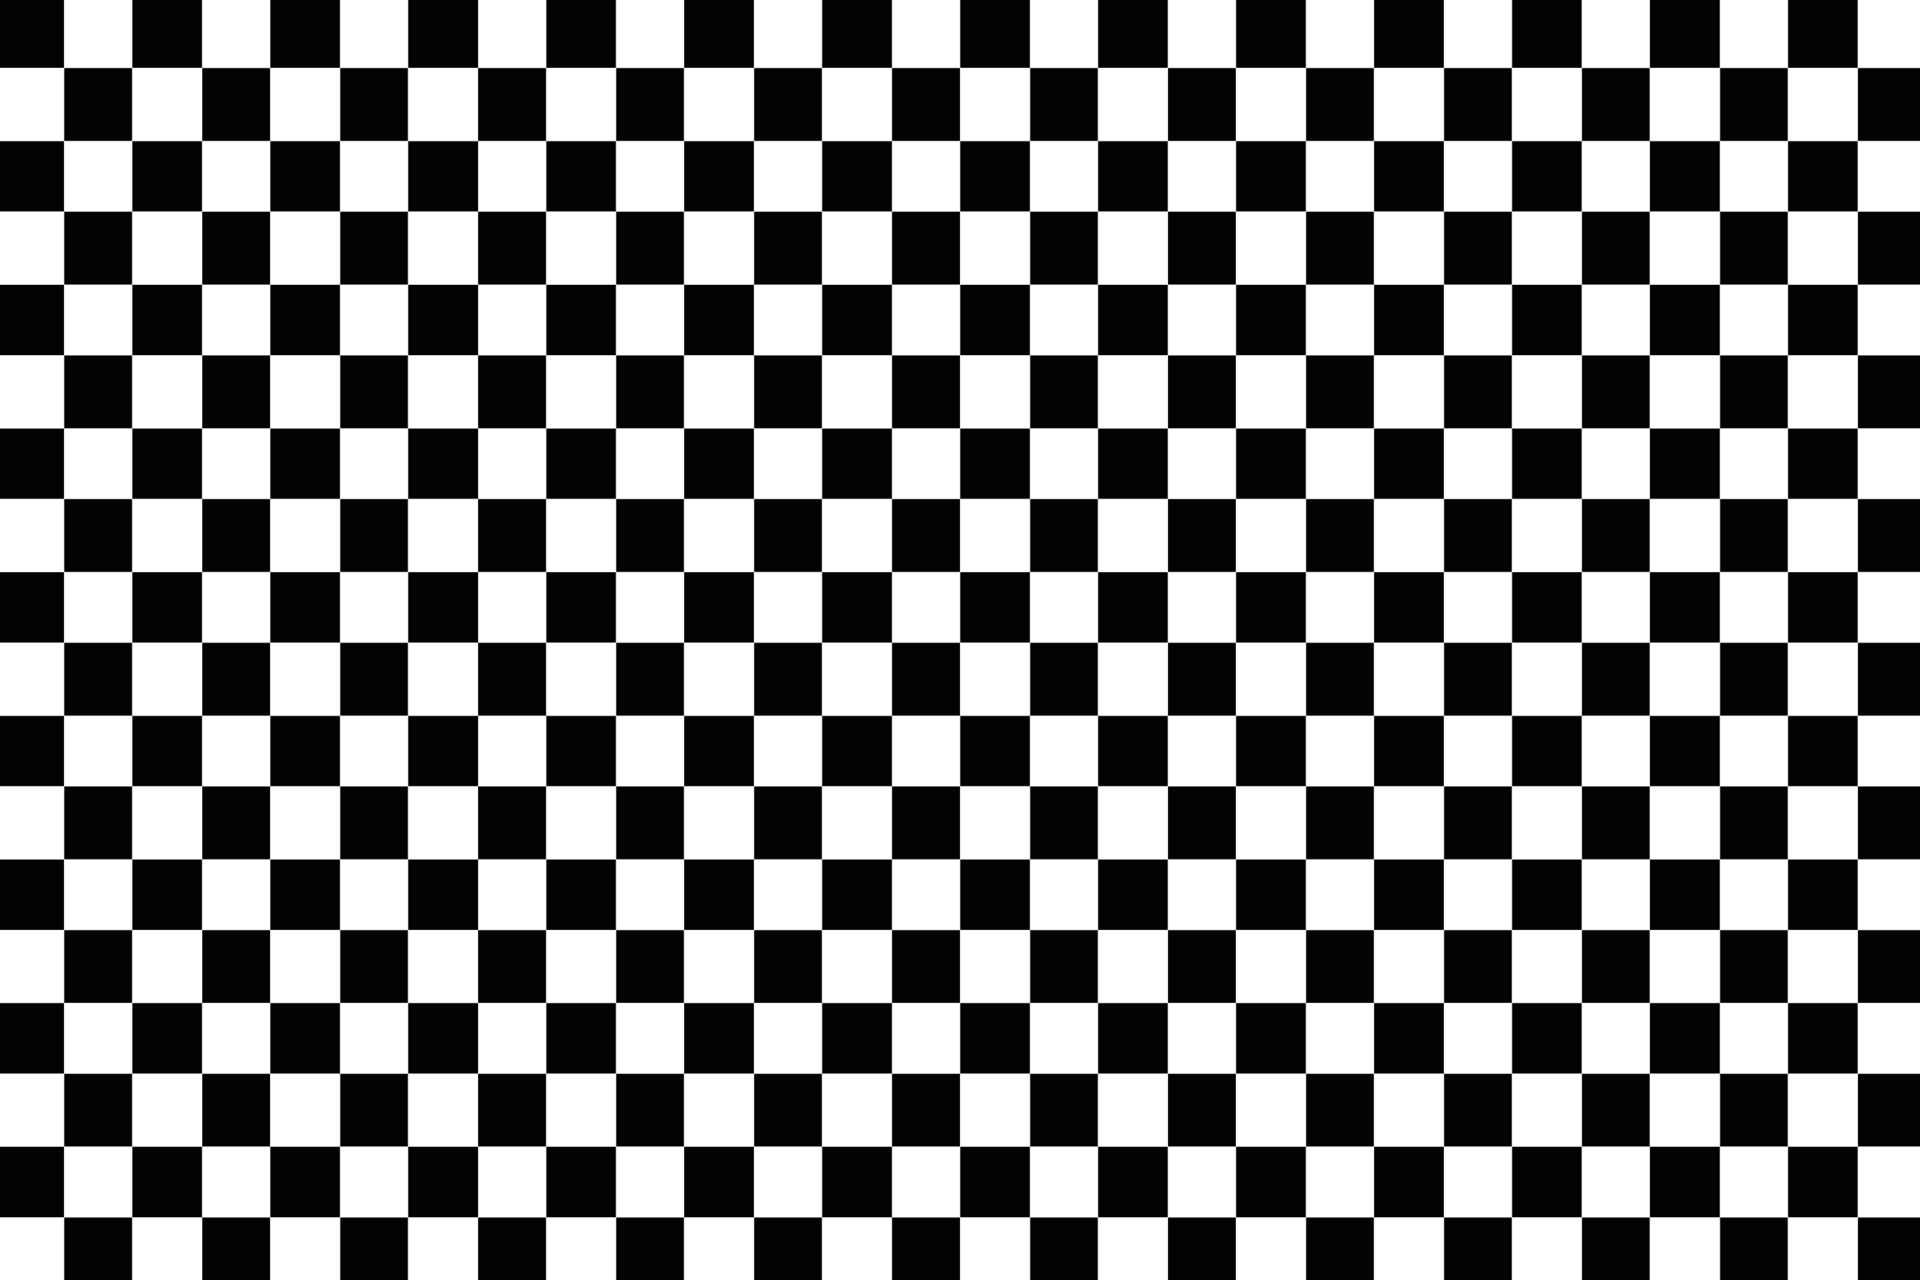 padrão de xadrez preto e branco 2092172 Vetor no Vecteezy